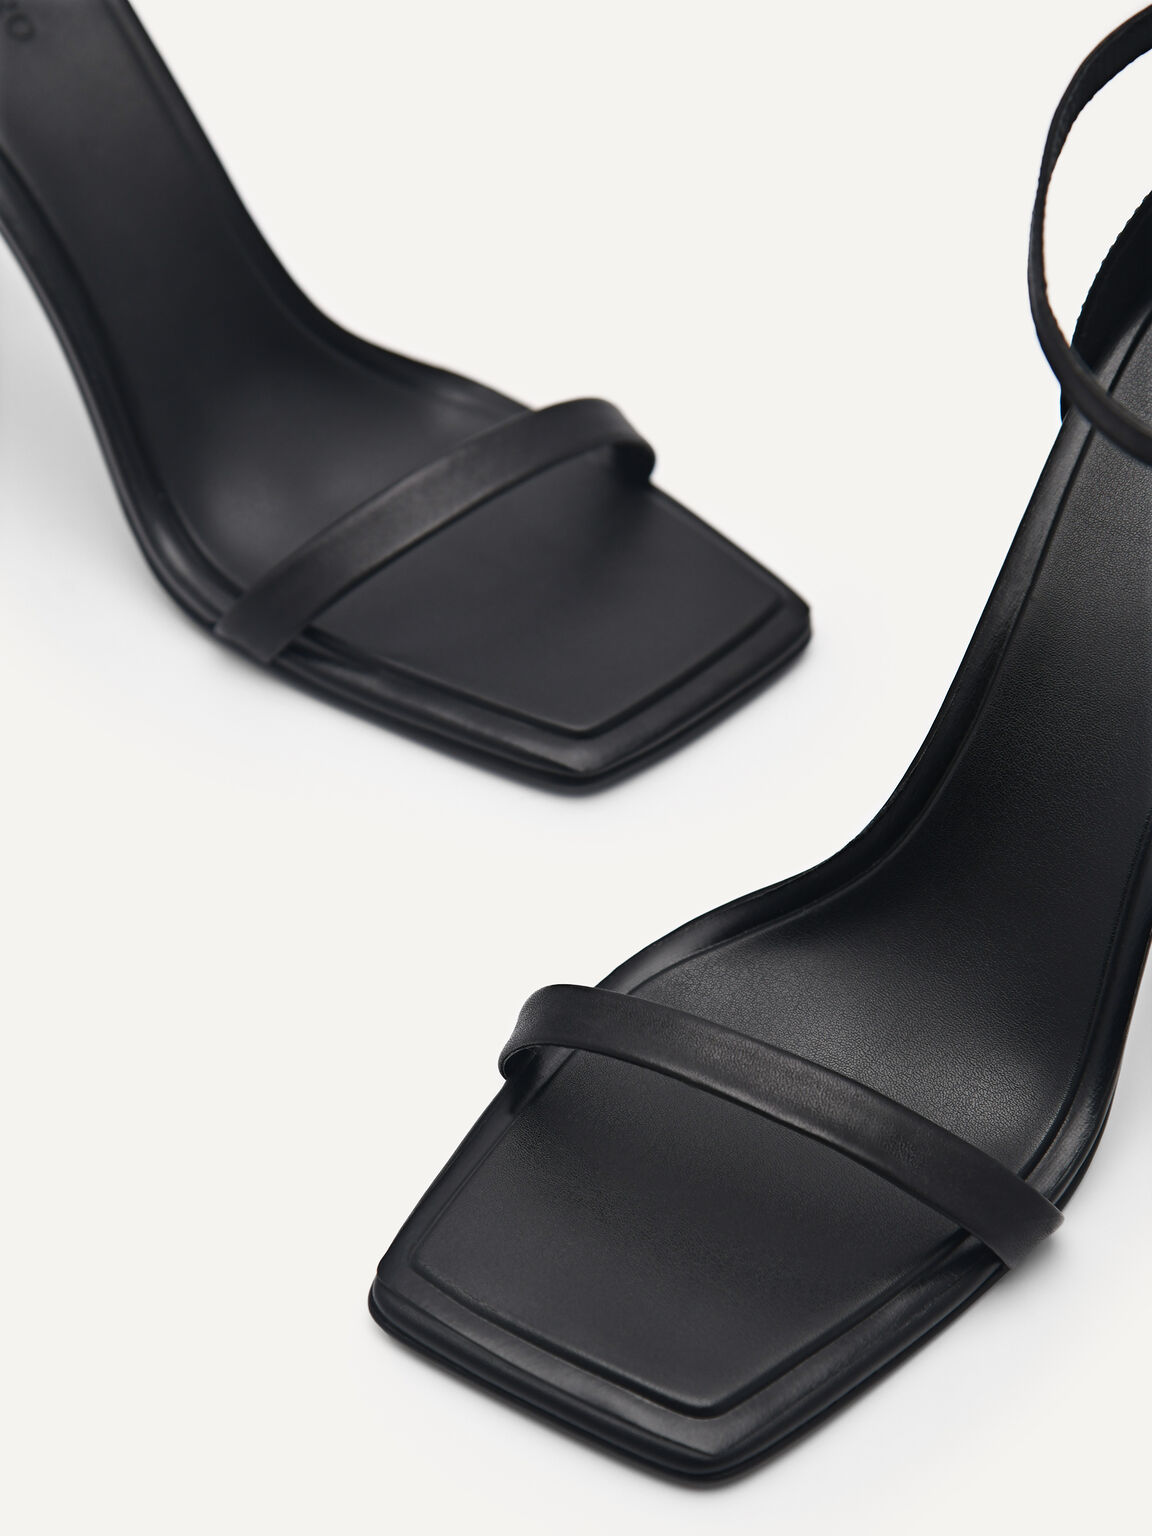 PEDRO Studio Donna Leather Heels, Black, hi-res